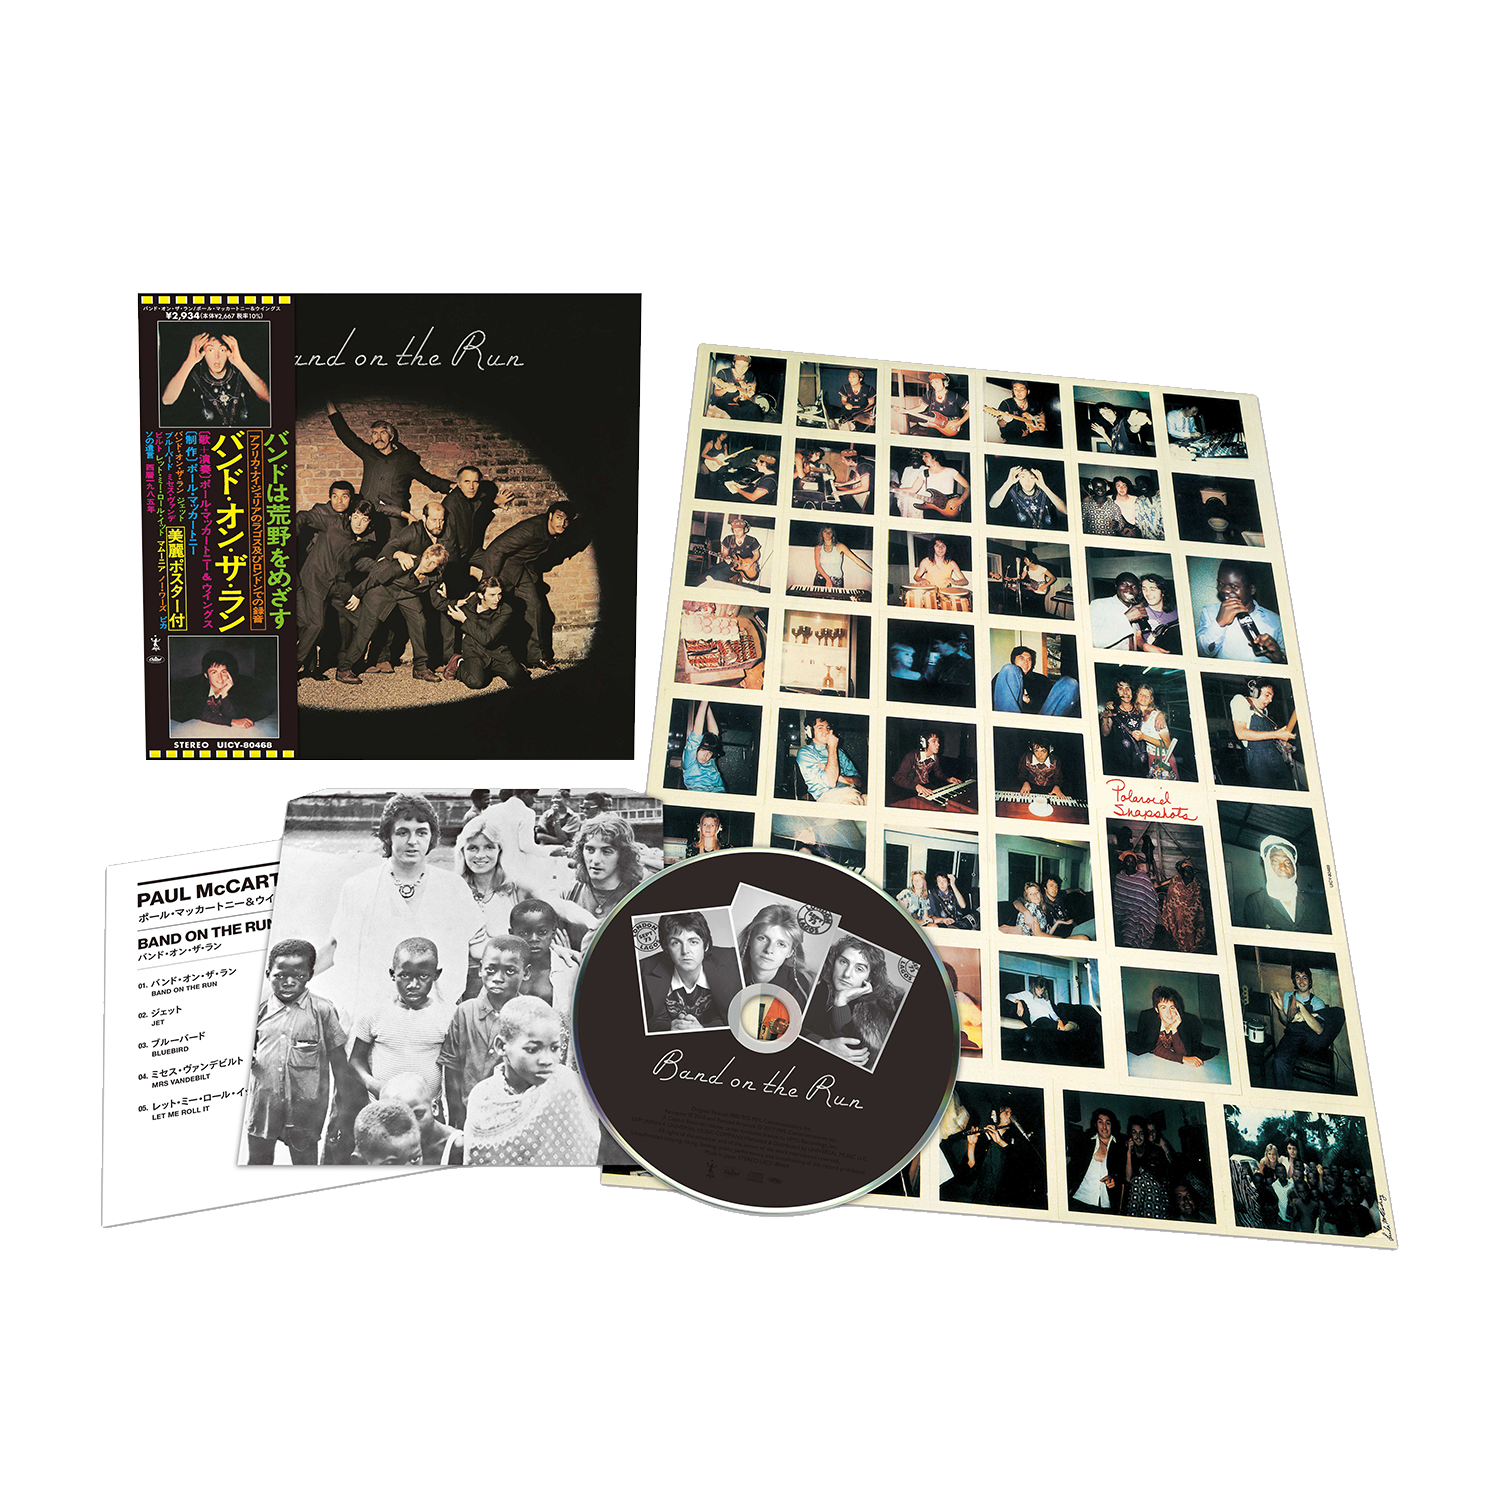 Paul McCartney & Wings - Band On The Run: Japanese SHM-CD